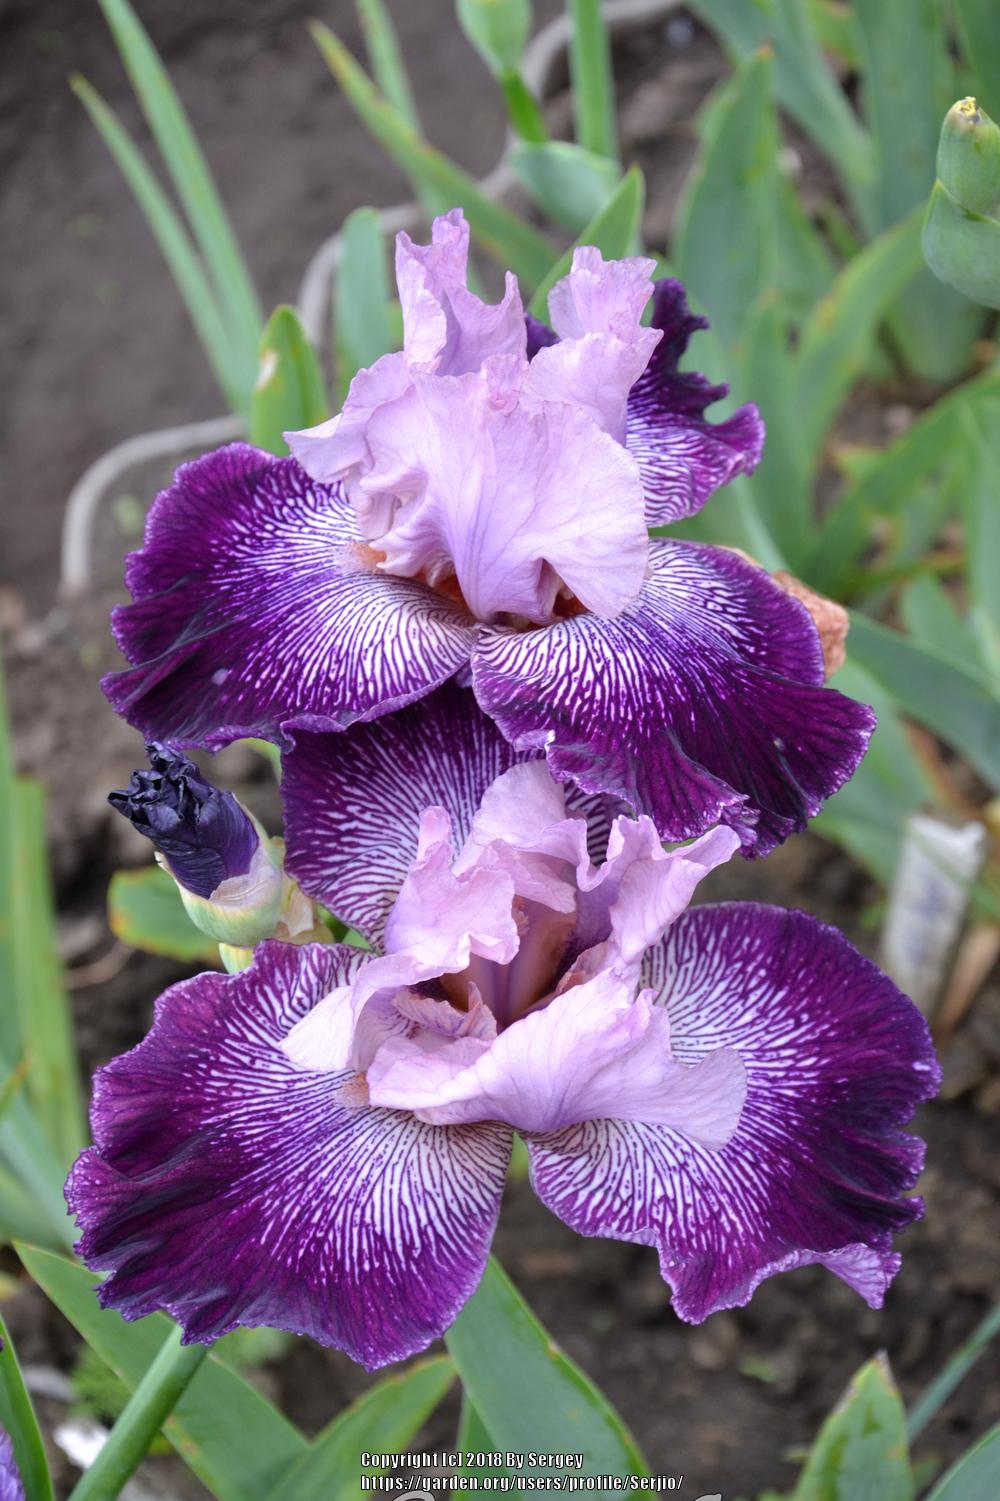 Photo of Tall Bearded Iris (Iris 'Astrology') uploaded by Serjio